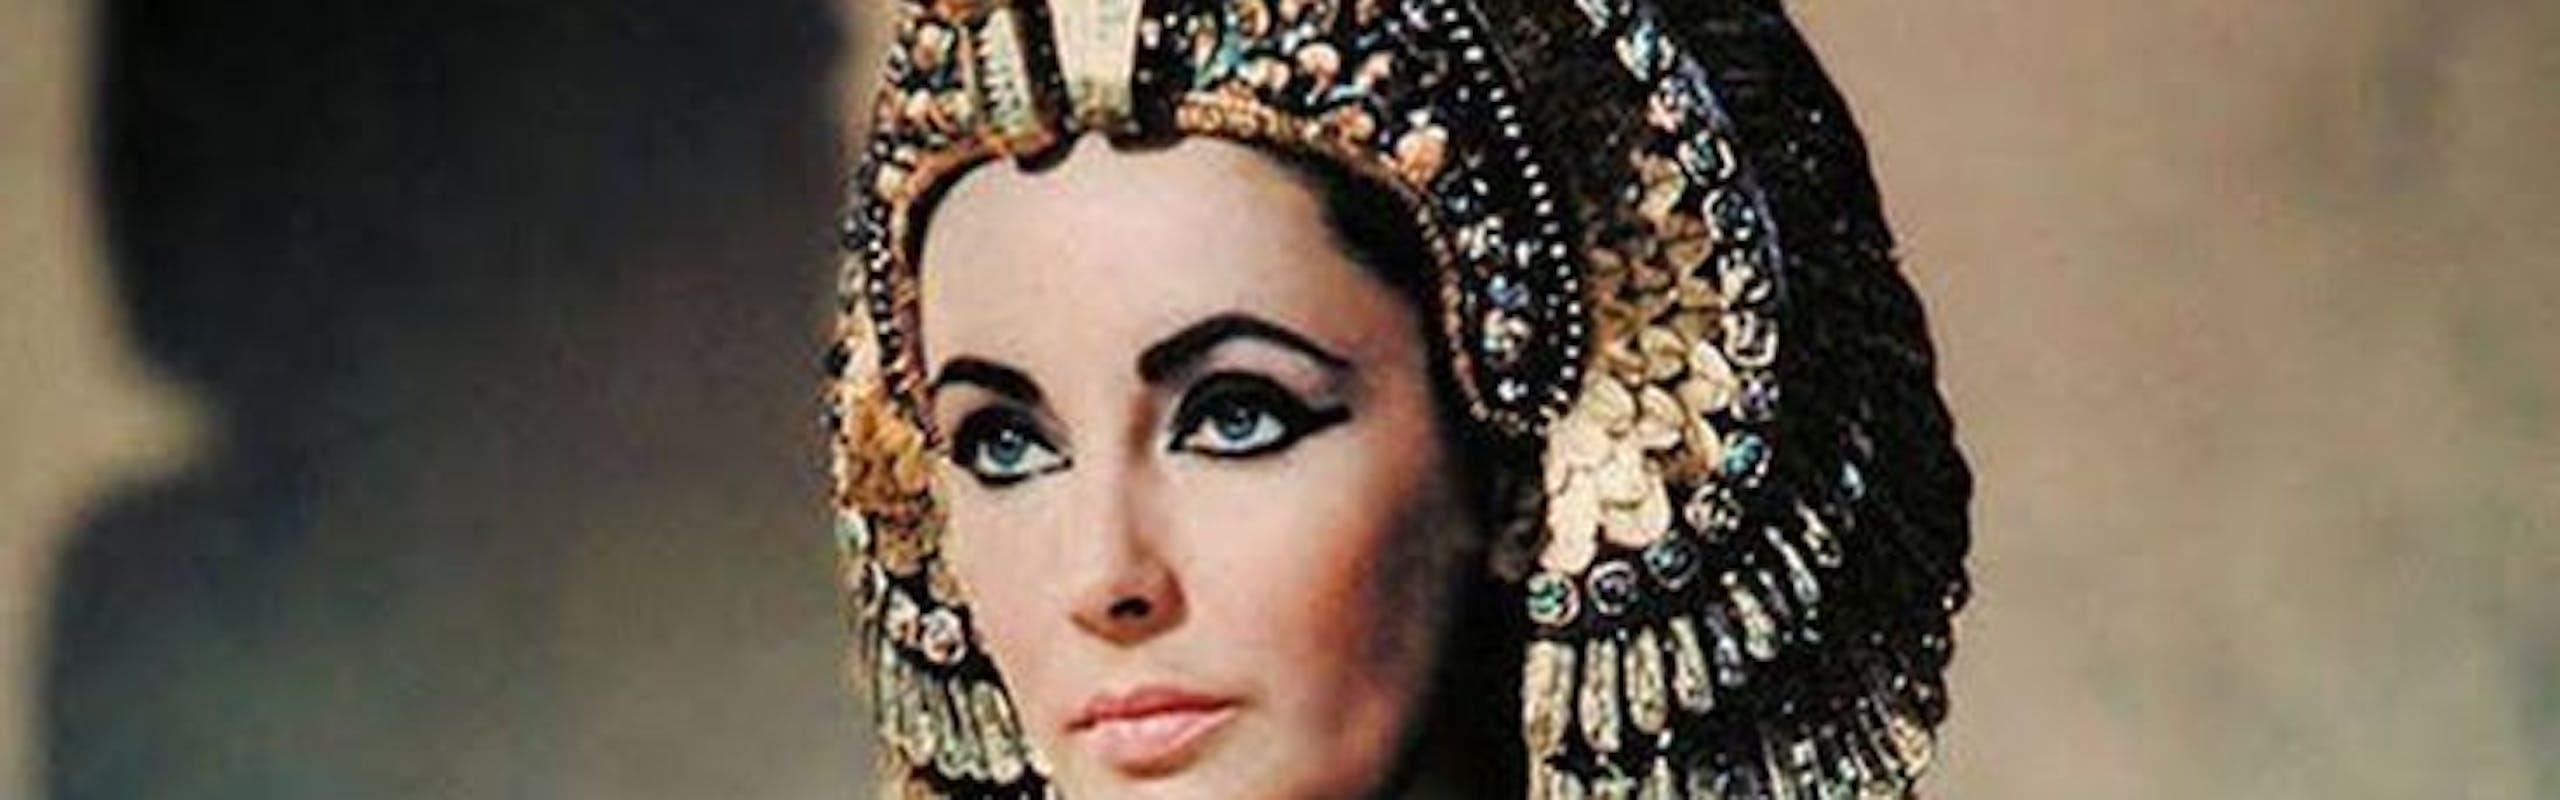 Elizabeth Taylor nel colossal hollywoodiano "Cleopatra" del 1963.